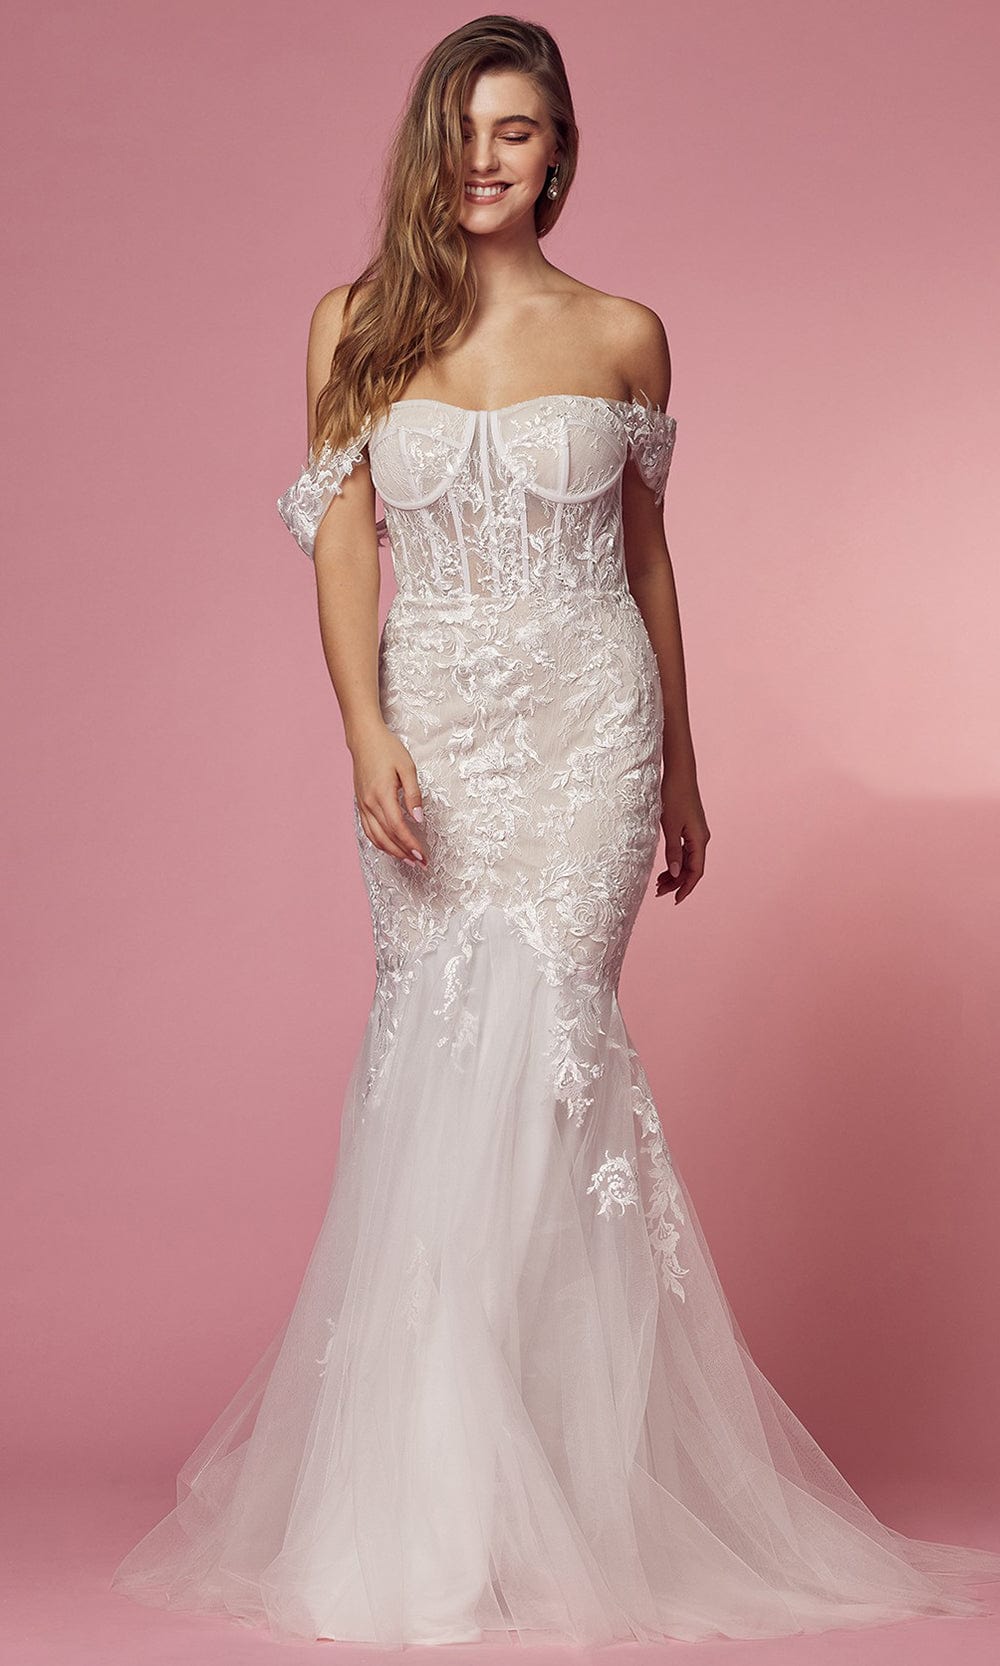 Nox Anabel Bridal JS924 - Corset Lace Bridal Gown Bridal Dresses 2 / White & Nude